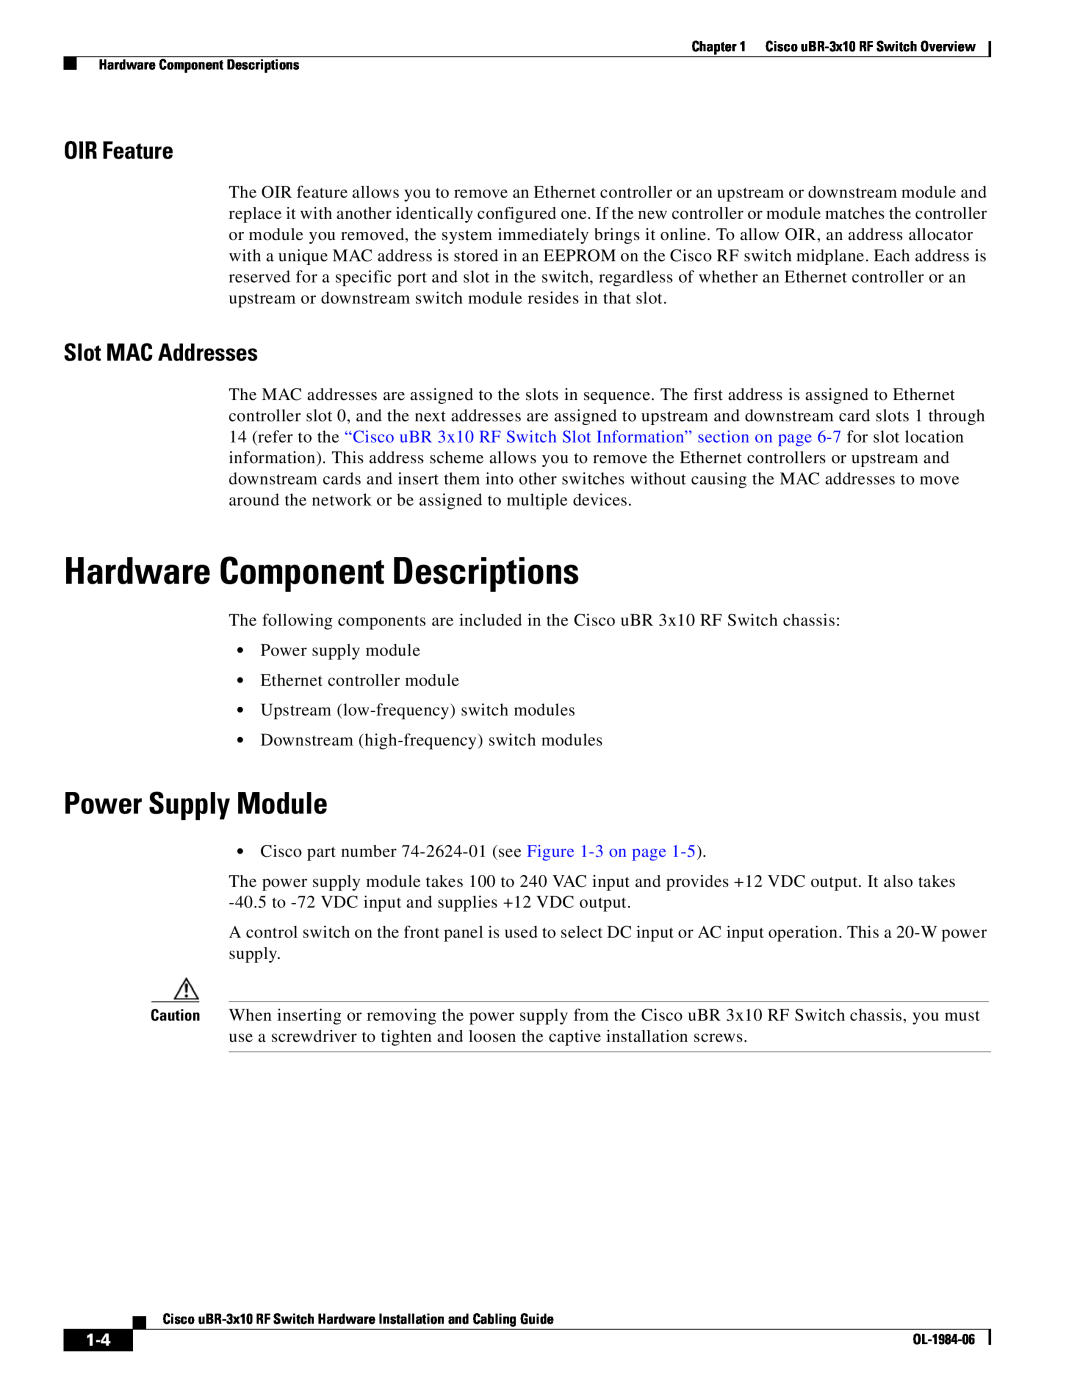 Cisco Systems UBR-3X10 manual Hardware Component Descriptions, Power Supply Module, OIR Feature, Slot MAC Addresses 